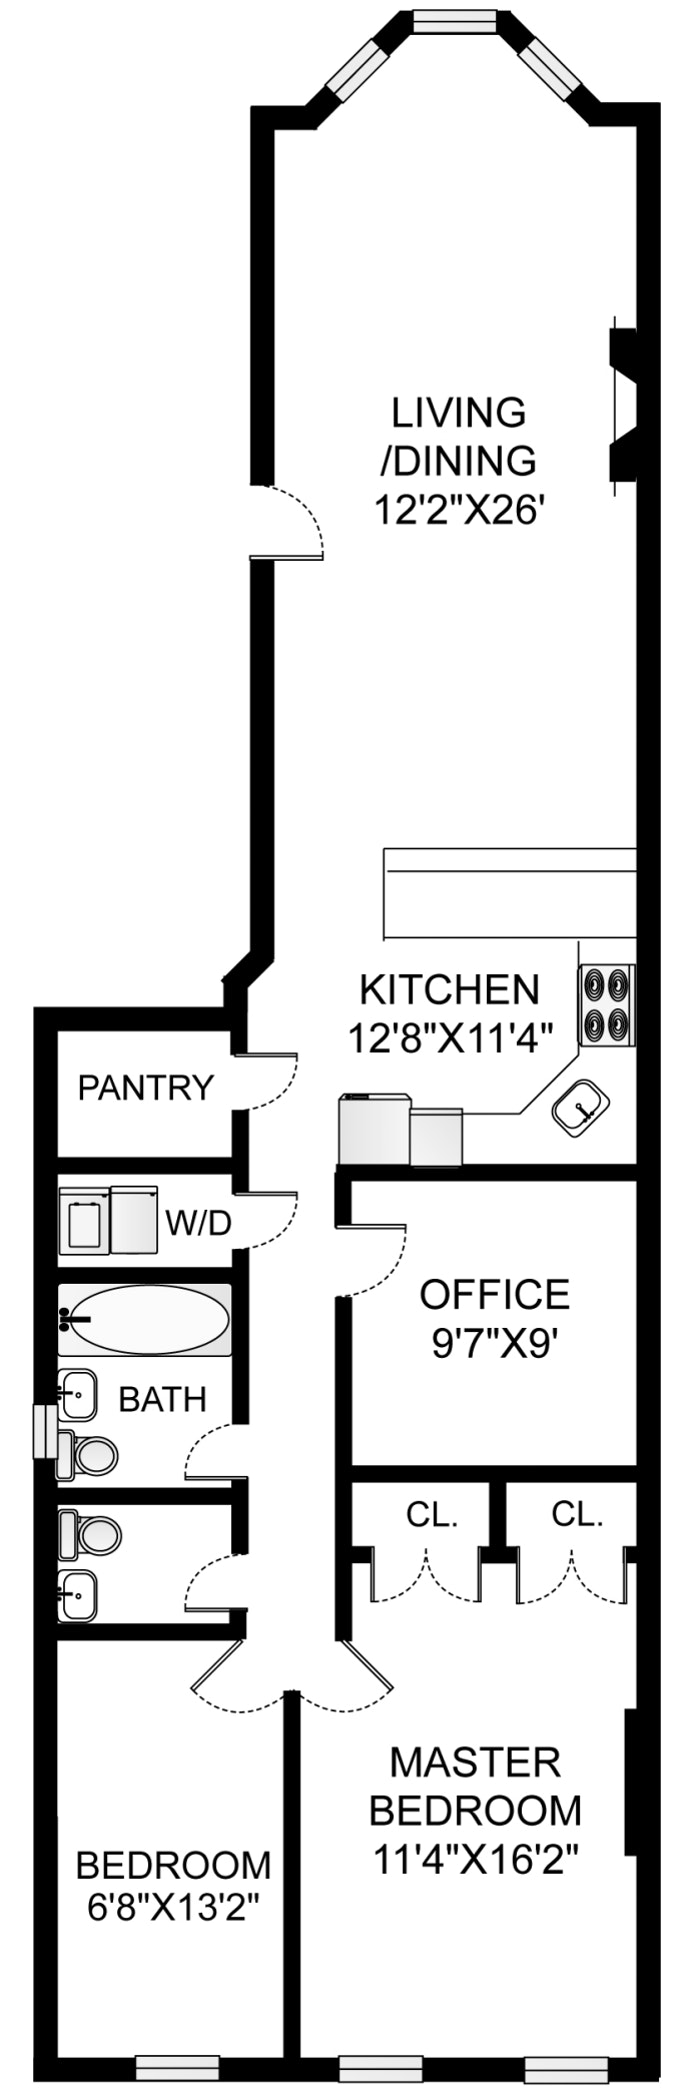 Floorplan for 914 8th Avenue, 2